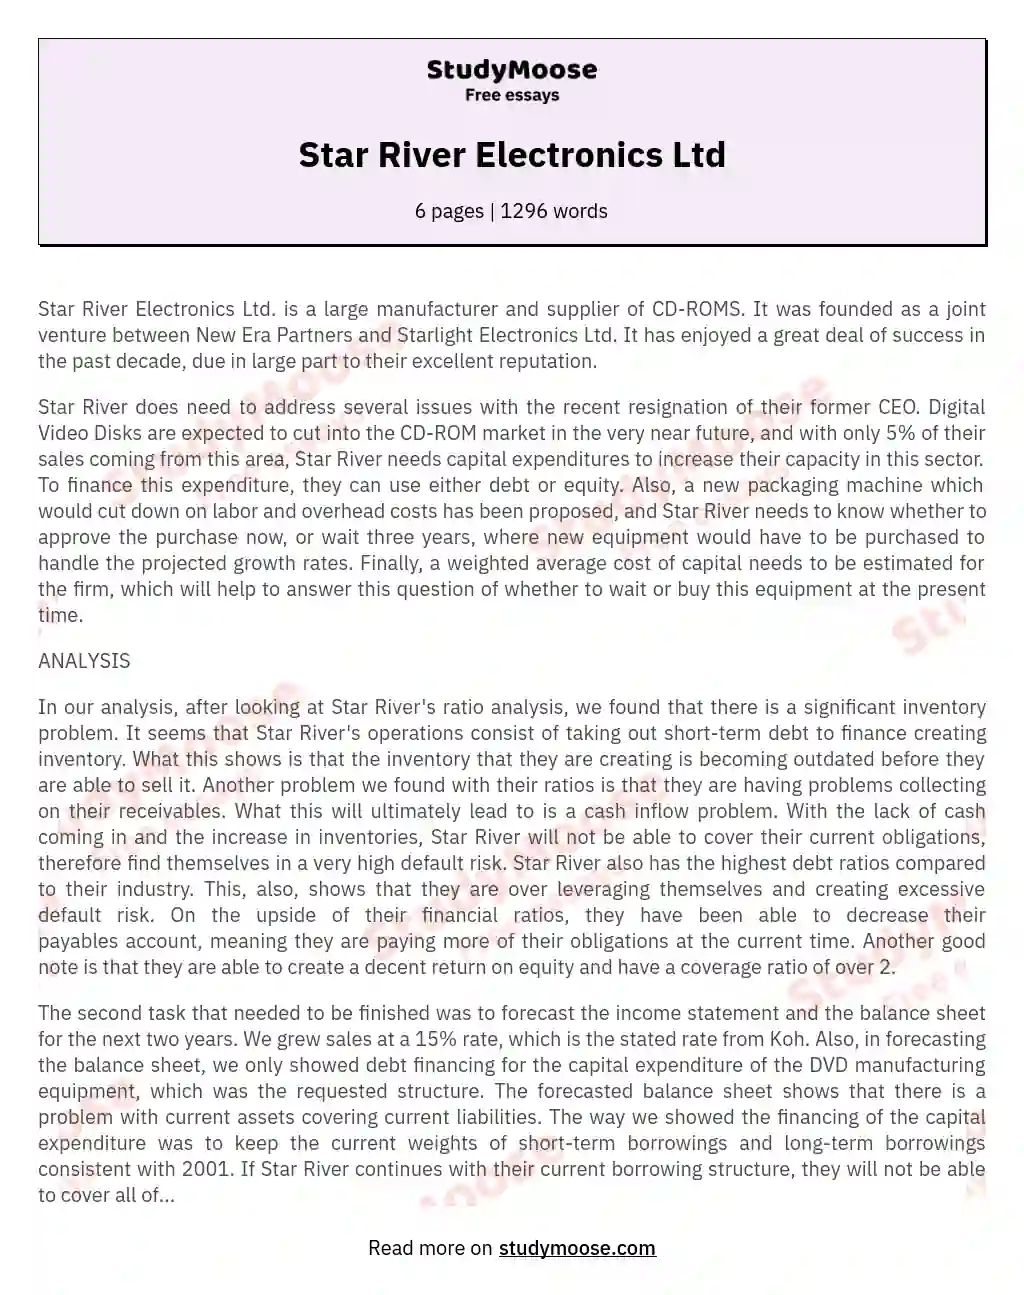 Star River Electronics Ltd essay